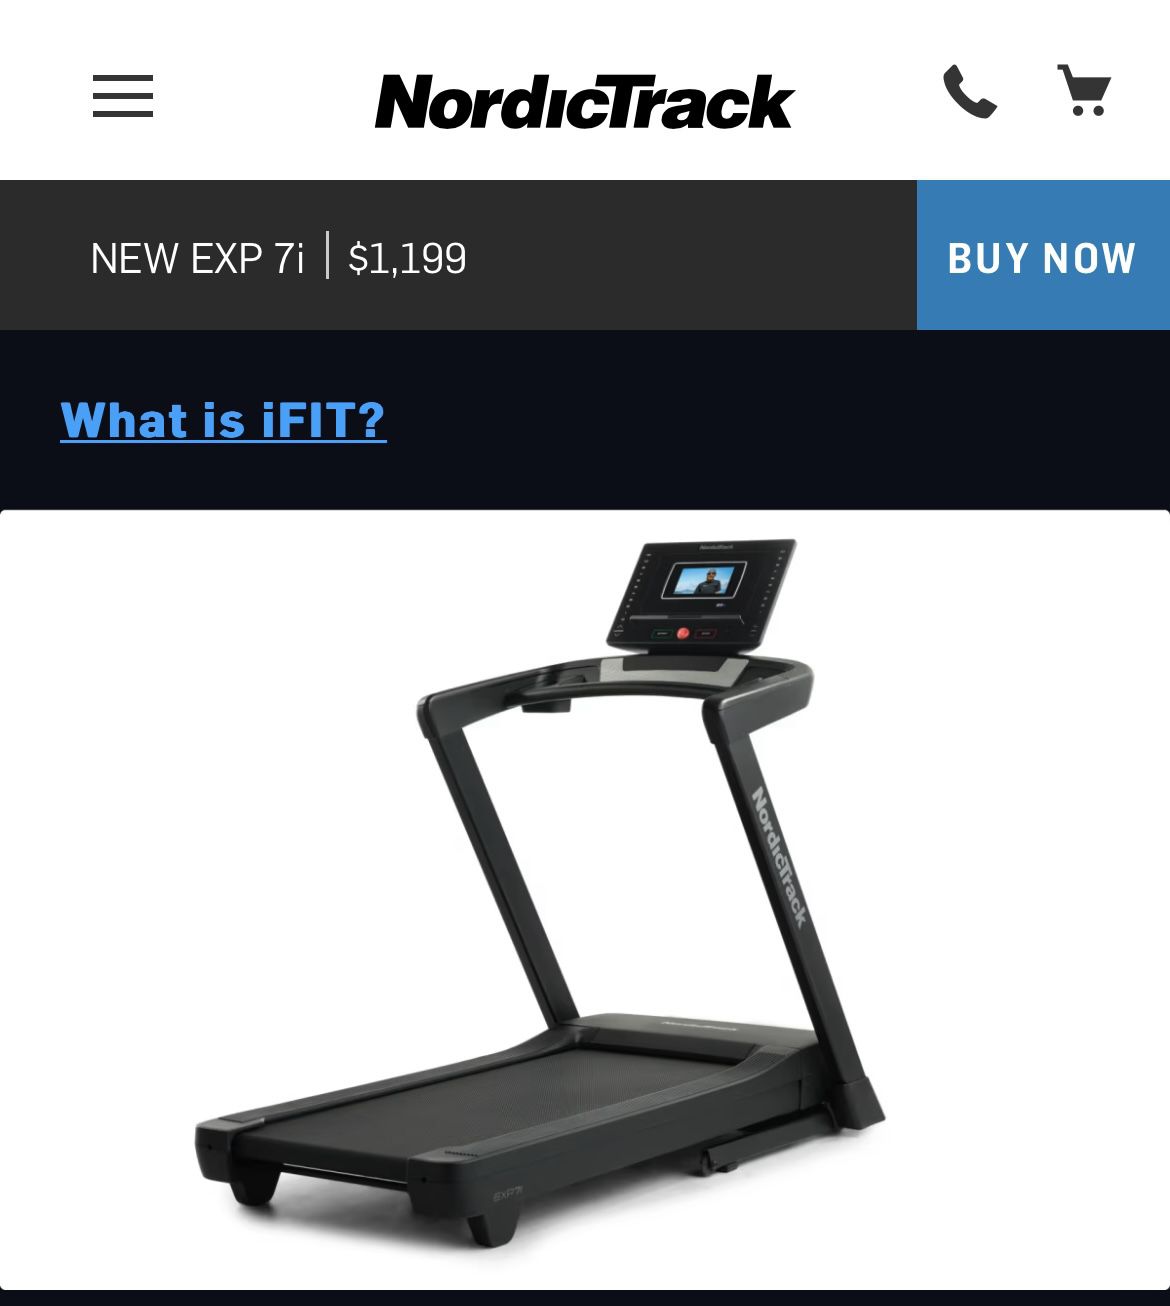 Brand New NordicTrack EXP 71 Treadmill - Still In Box!